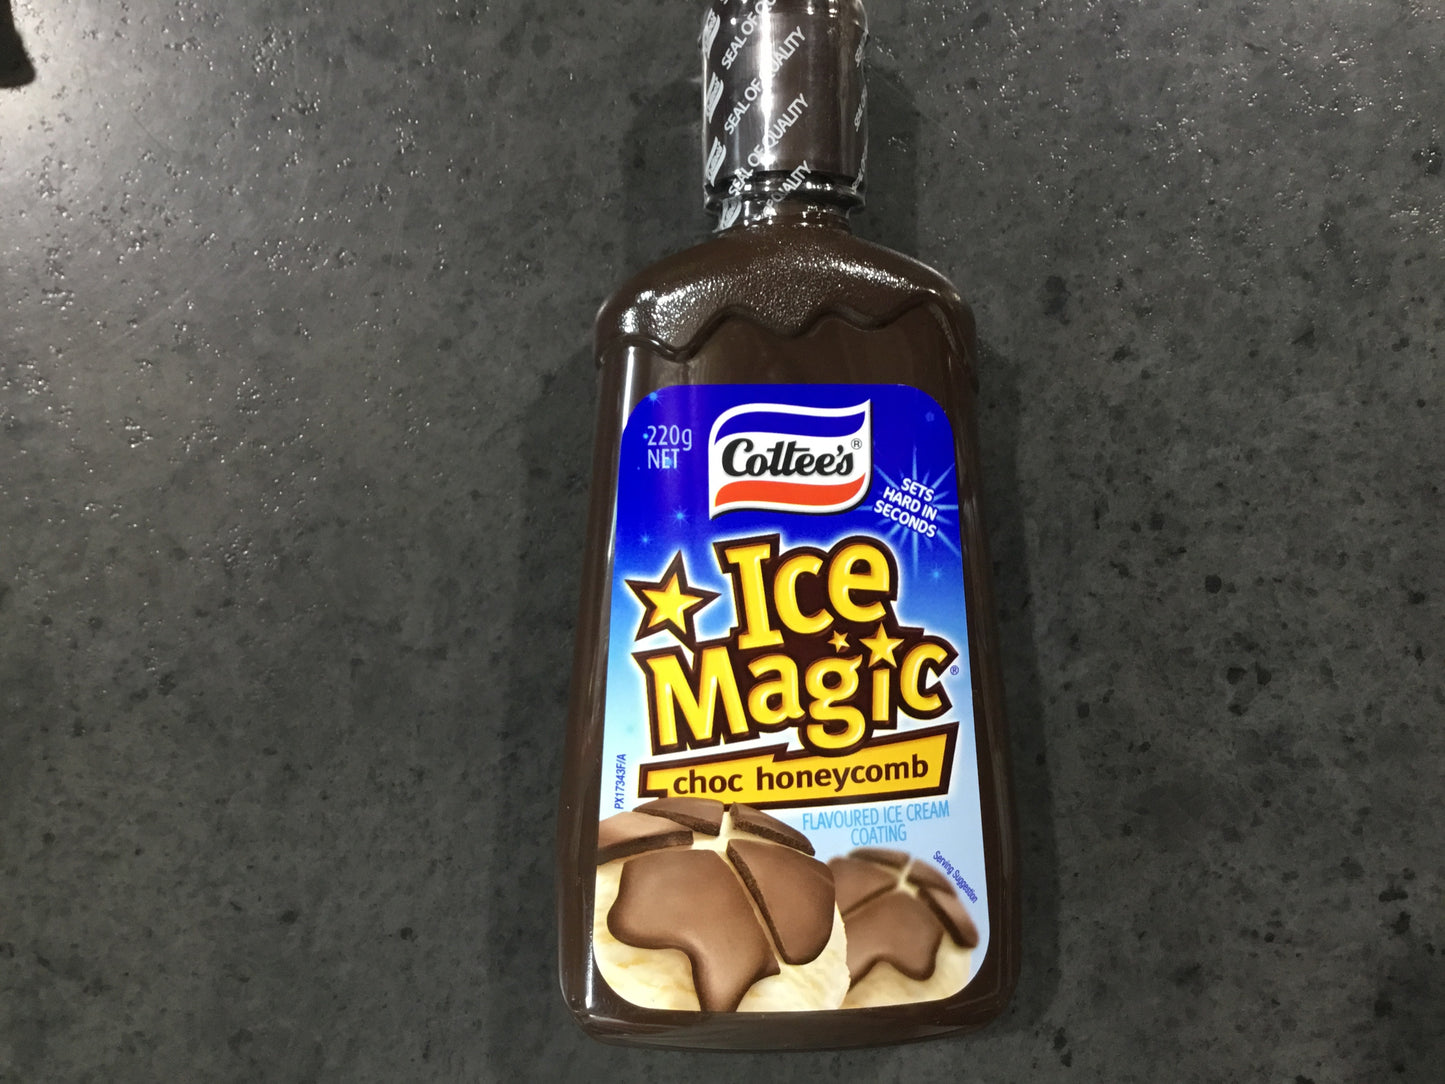 Cottees Ice Magic Choc Honeycomb 220g